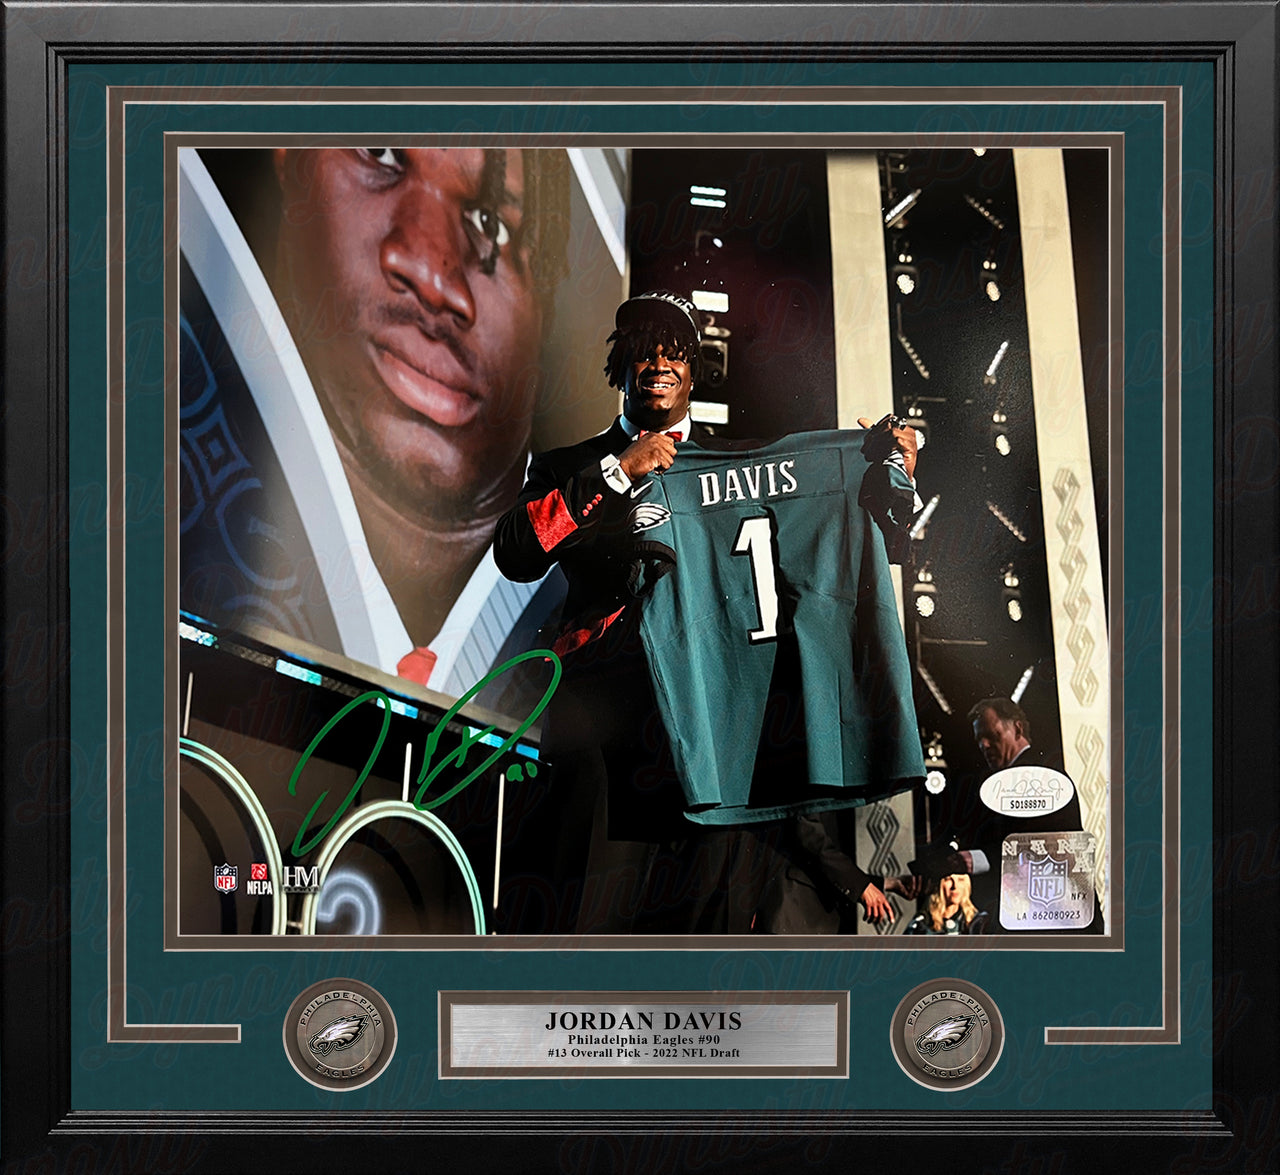 Jordan Davis Philadelphia Eagles Autographed Draft Night Framed Football Photo - Dynasty Sports & Framing 